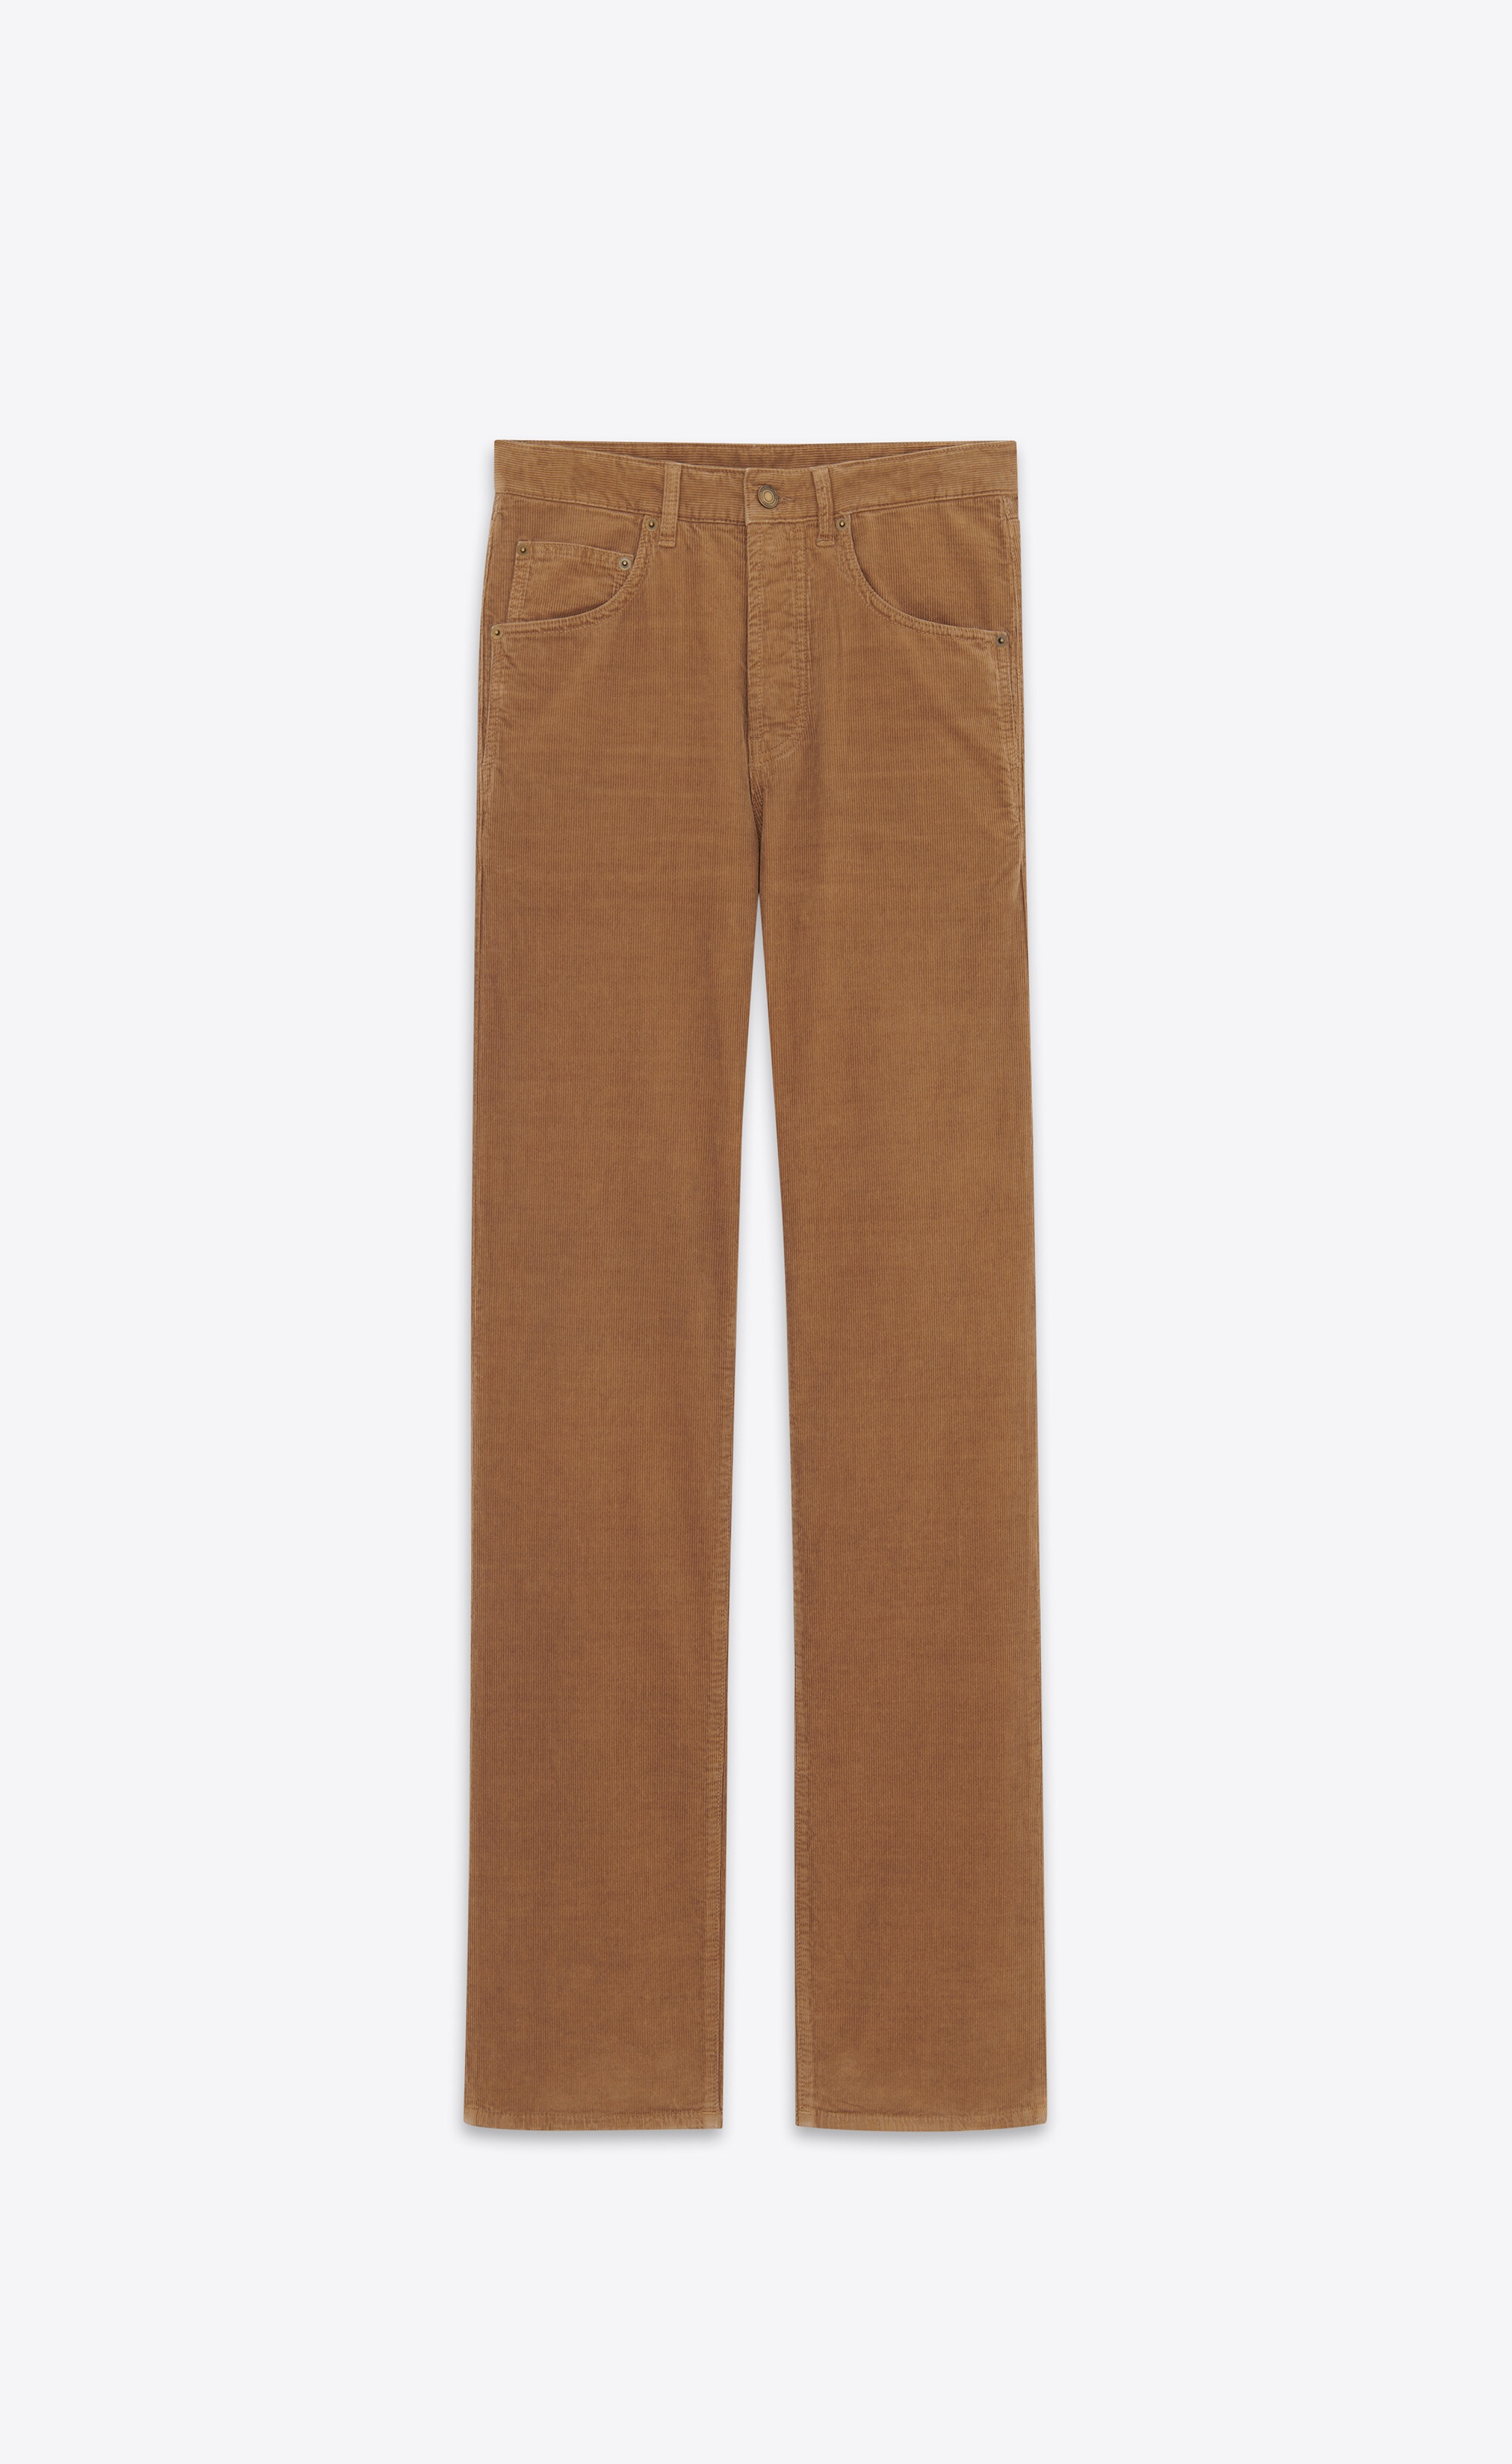 long baggy jeans in fall leaf corduroy - 1